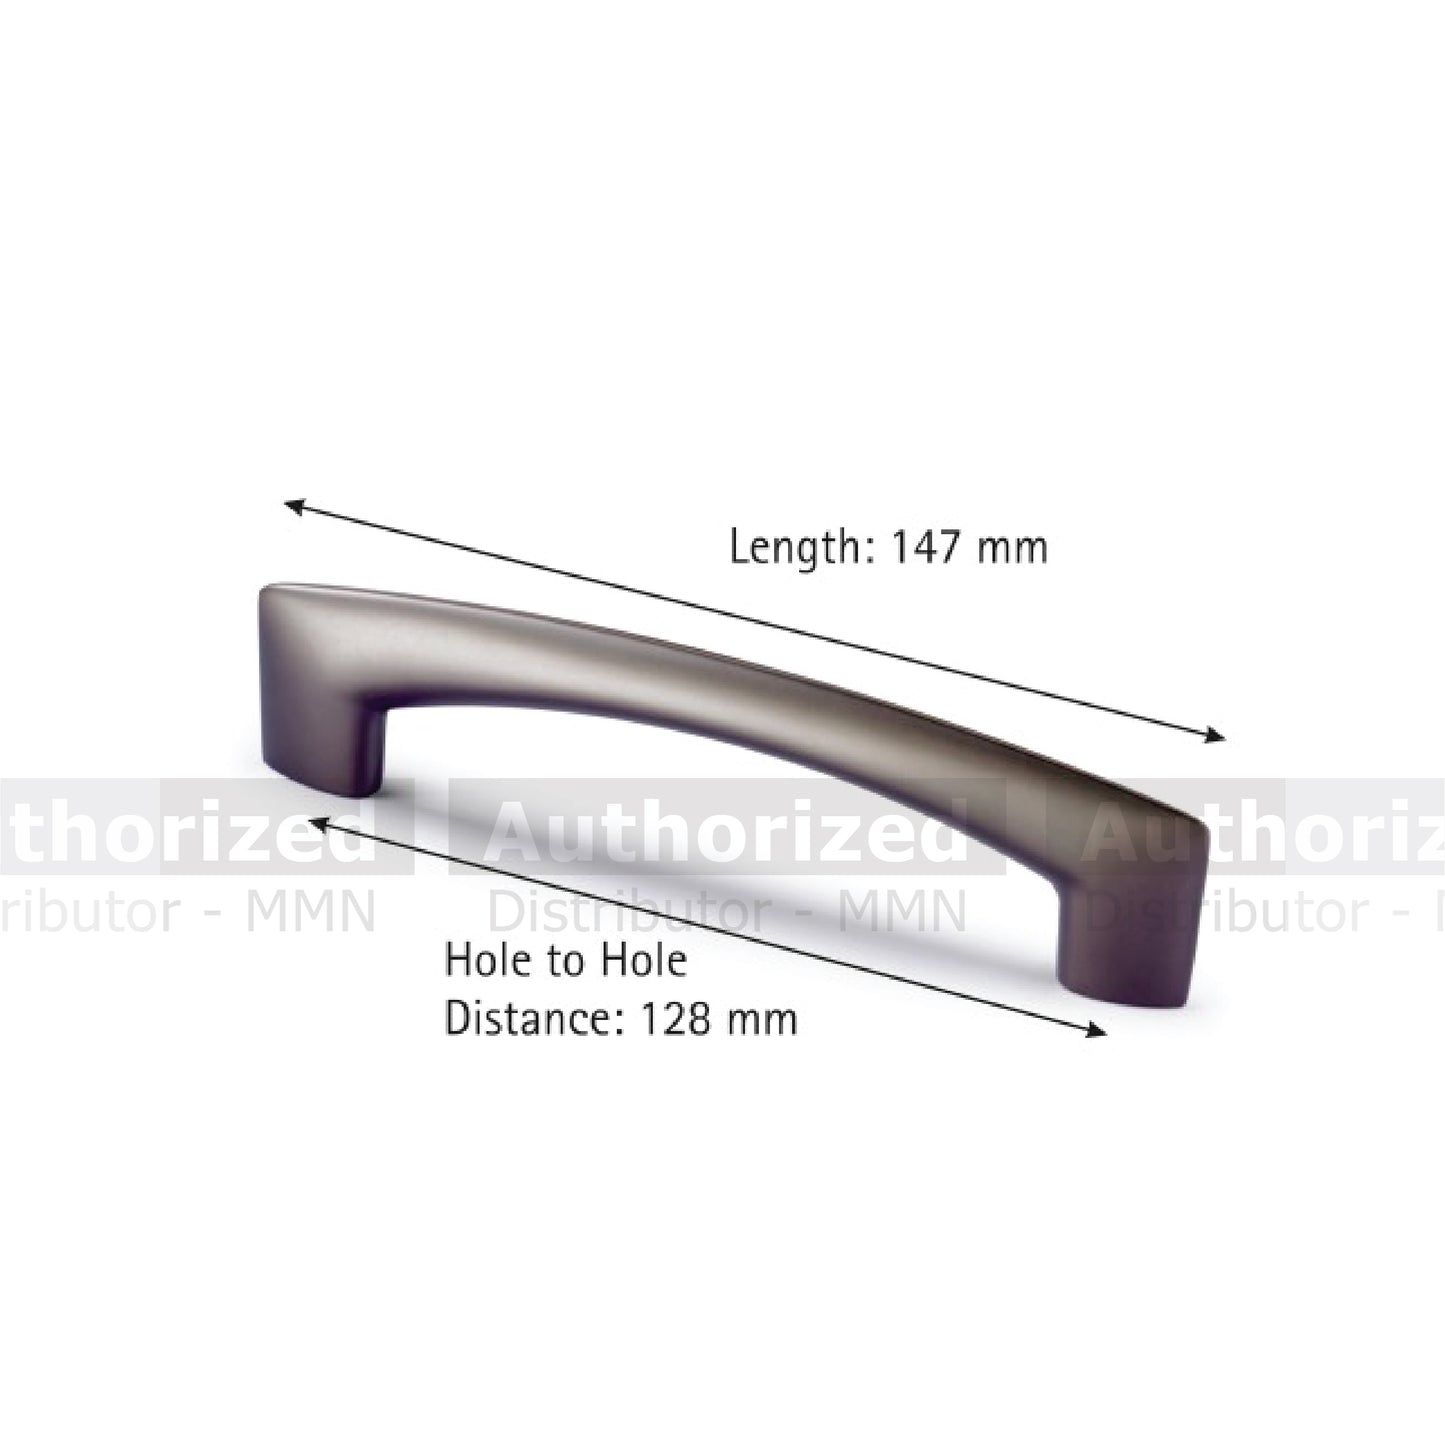 Hettich Enna Zinc Bronze & Stainless-Steel look Finish Handle Each - HT911342